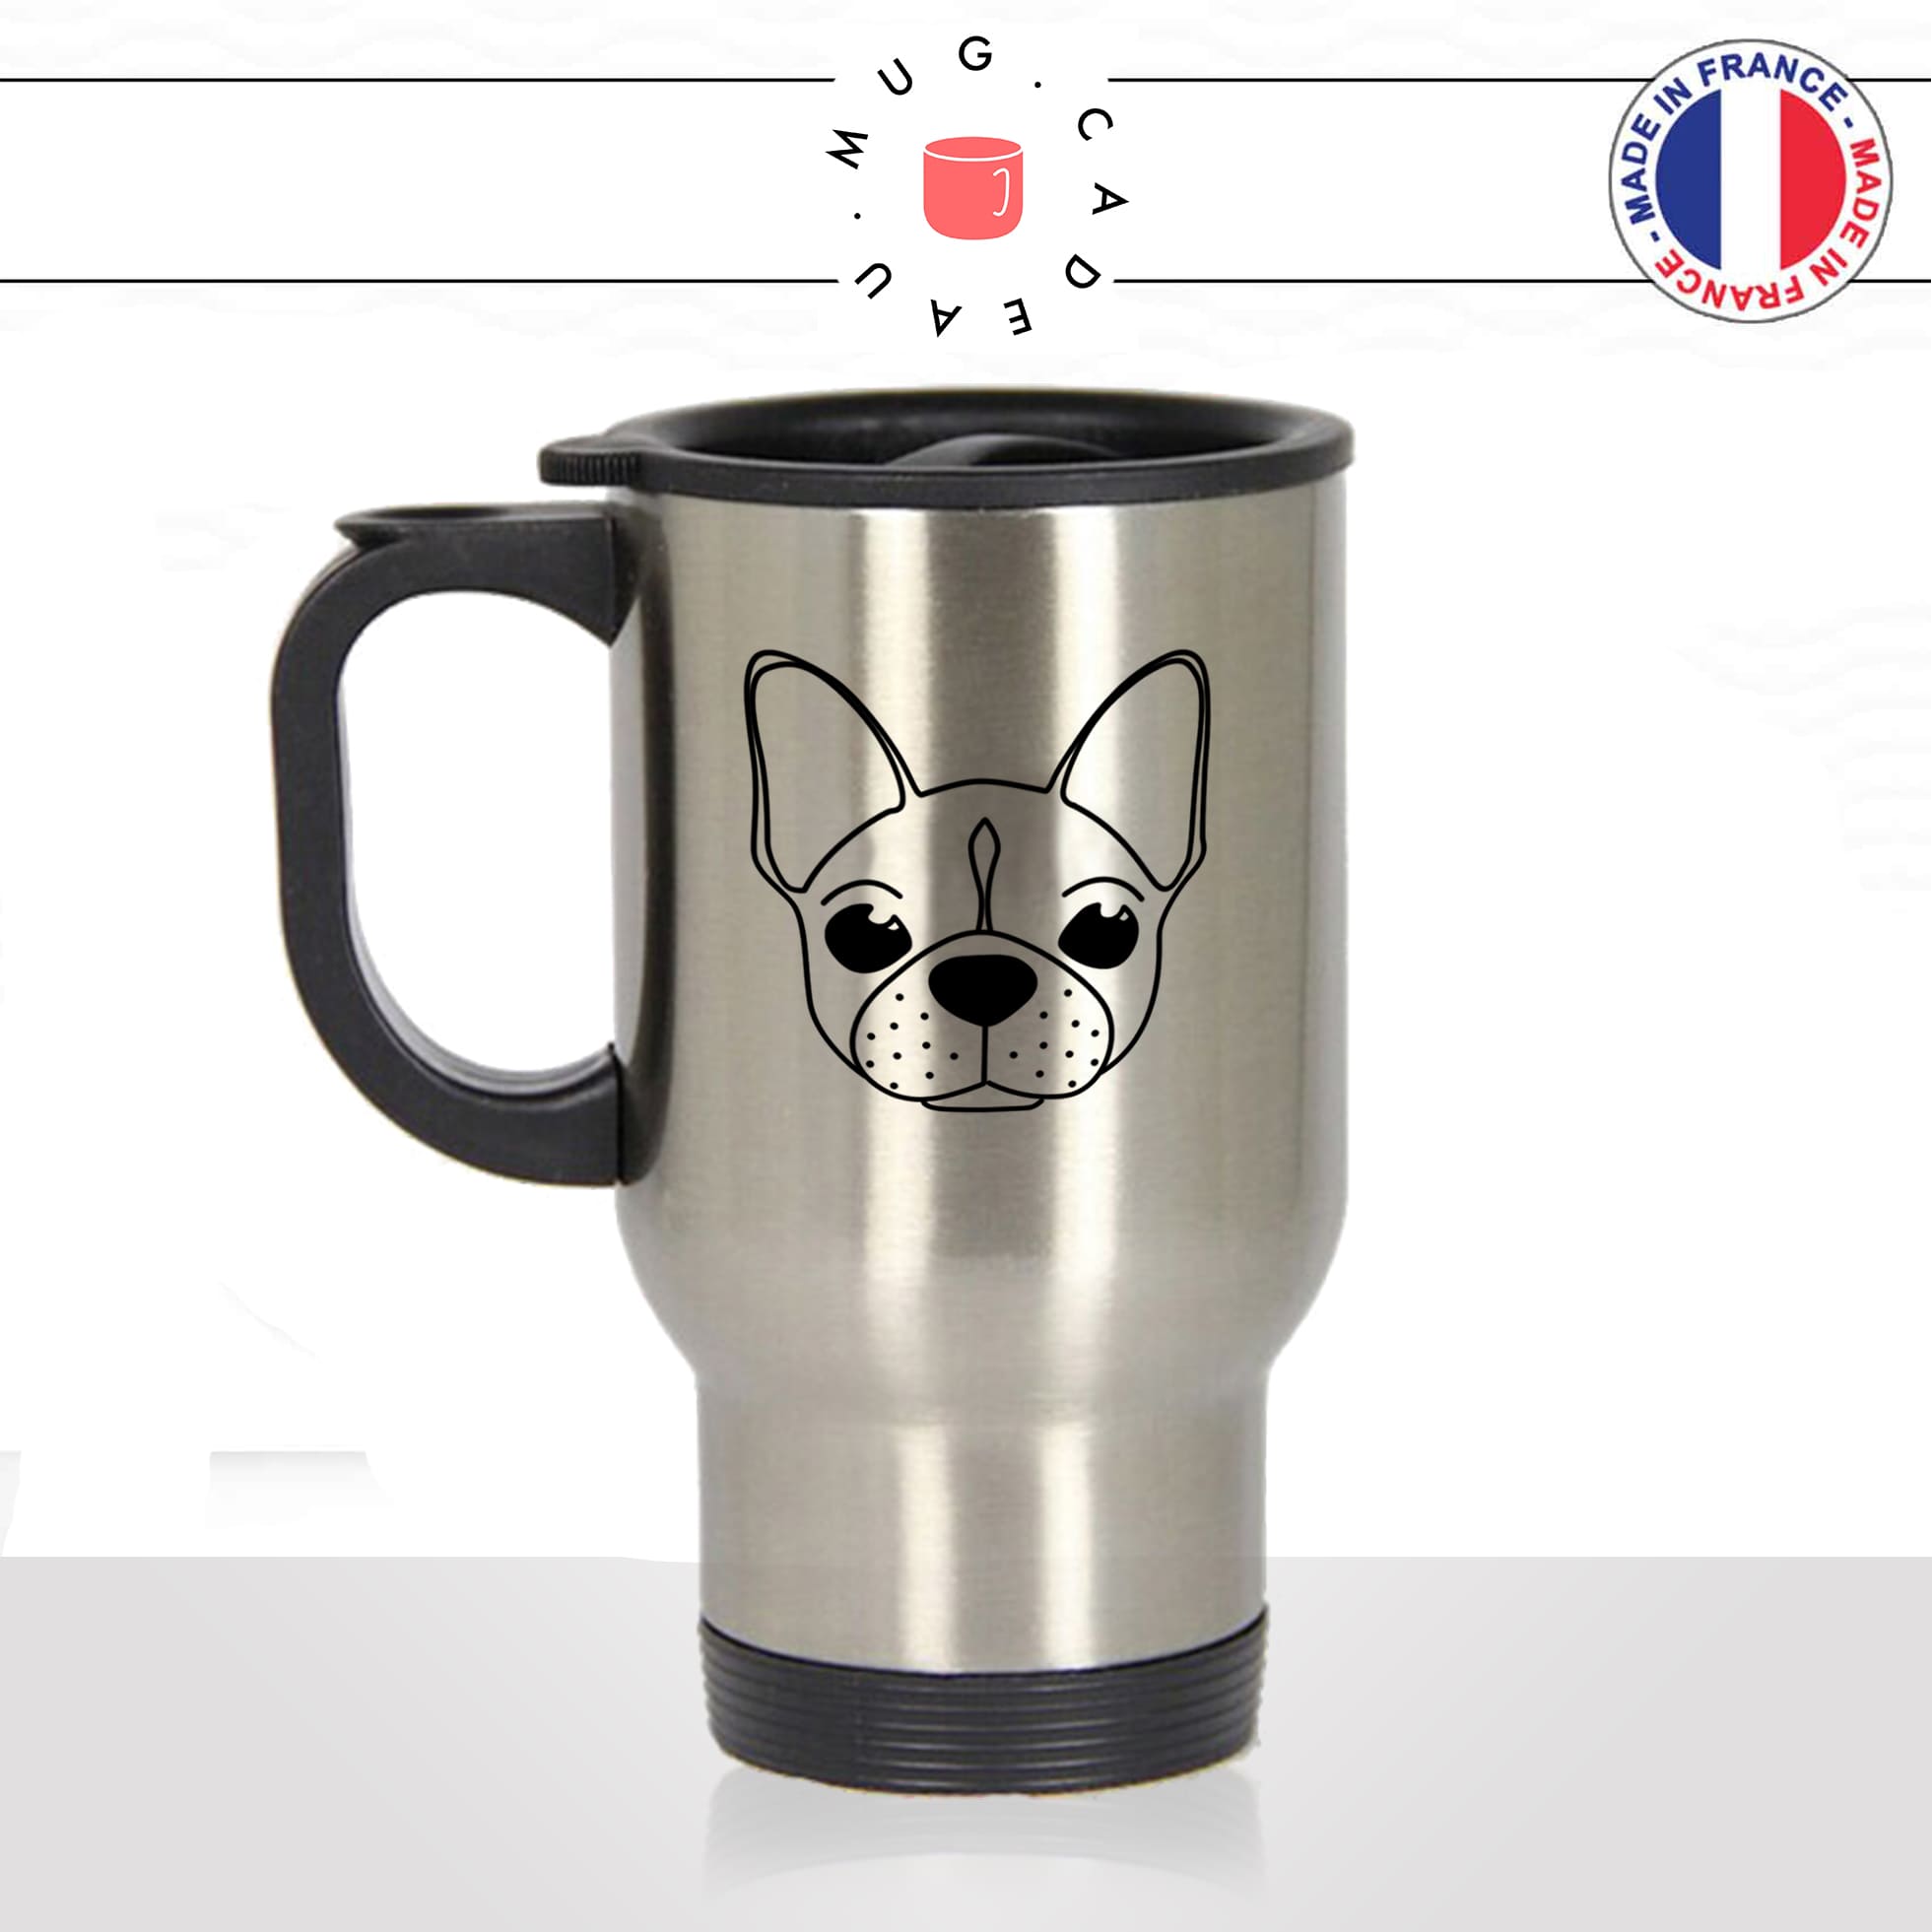 mug-tasse-thermos-de-voyage-inox-gris-chien-pug-bulldog-maitre-mignon-dessin-chiot-animal-mignon-idée-cadeau-original-unique